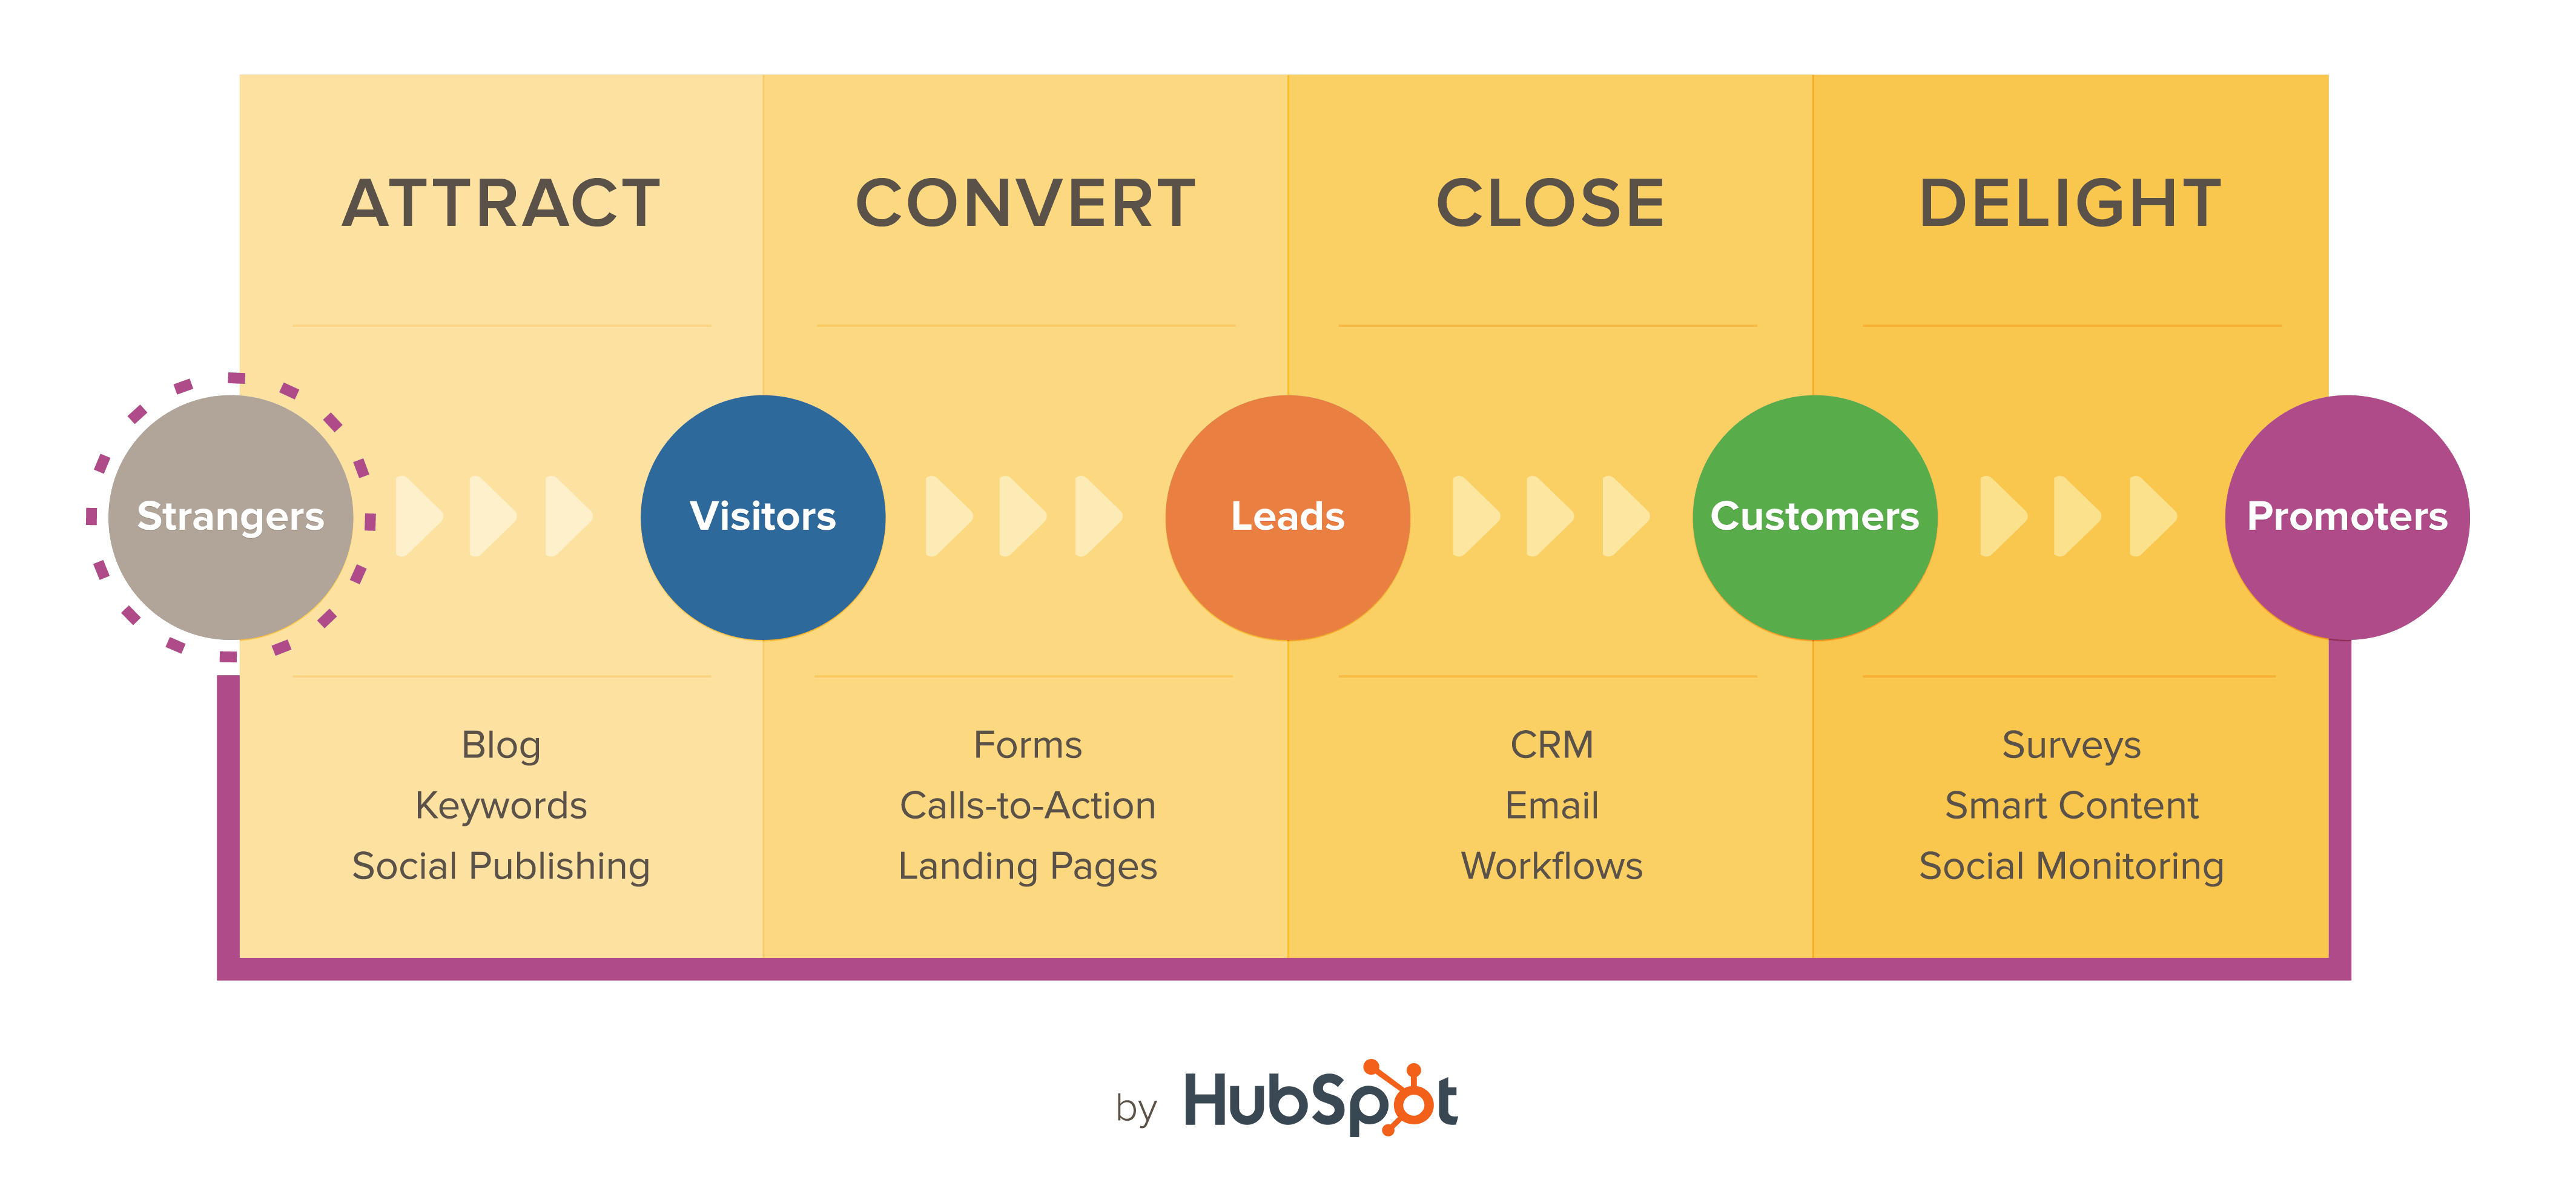 Hubspot infographic describing the inbound marketing process